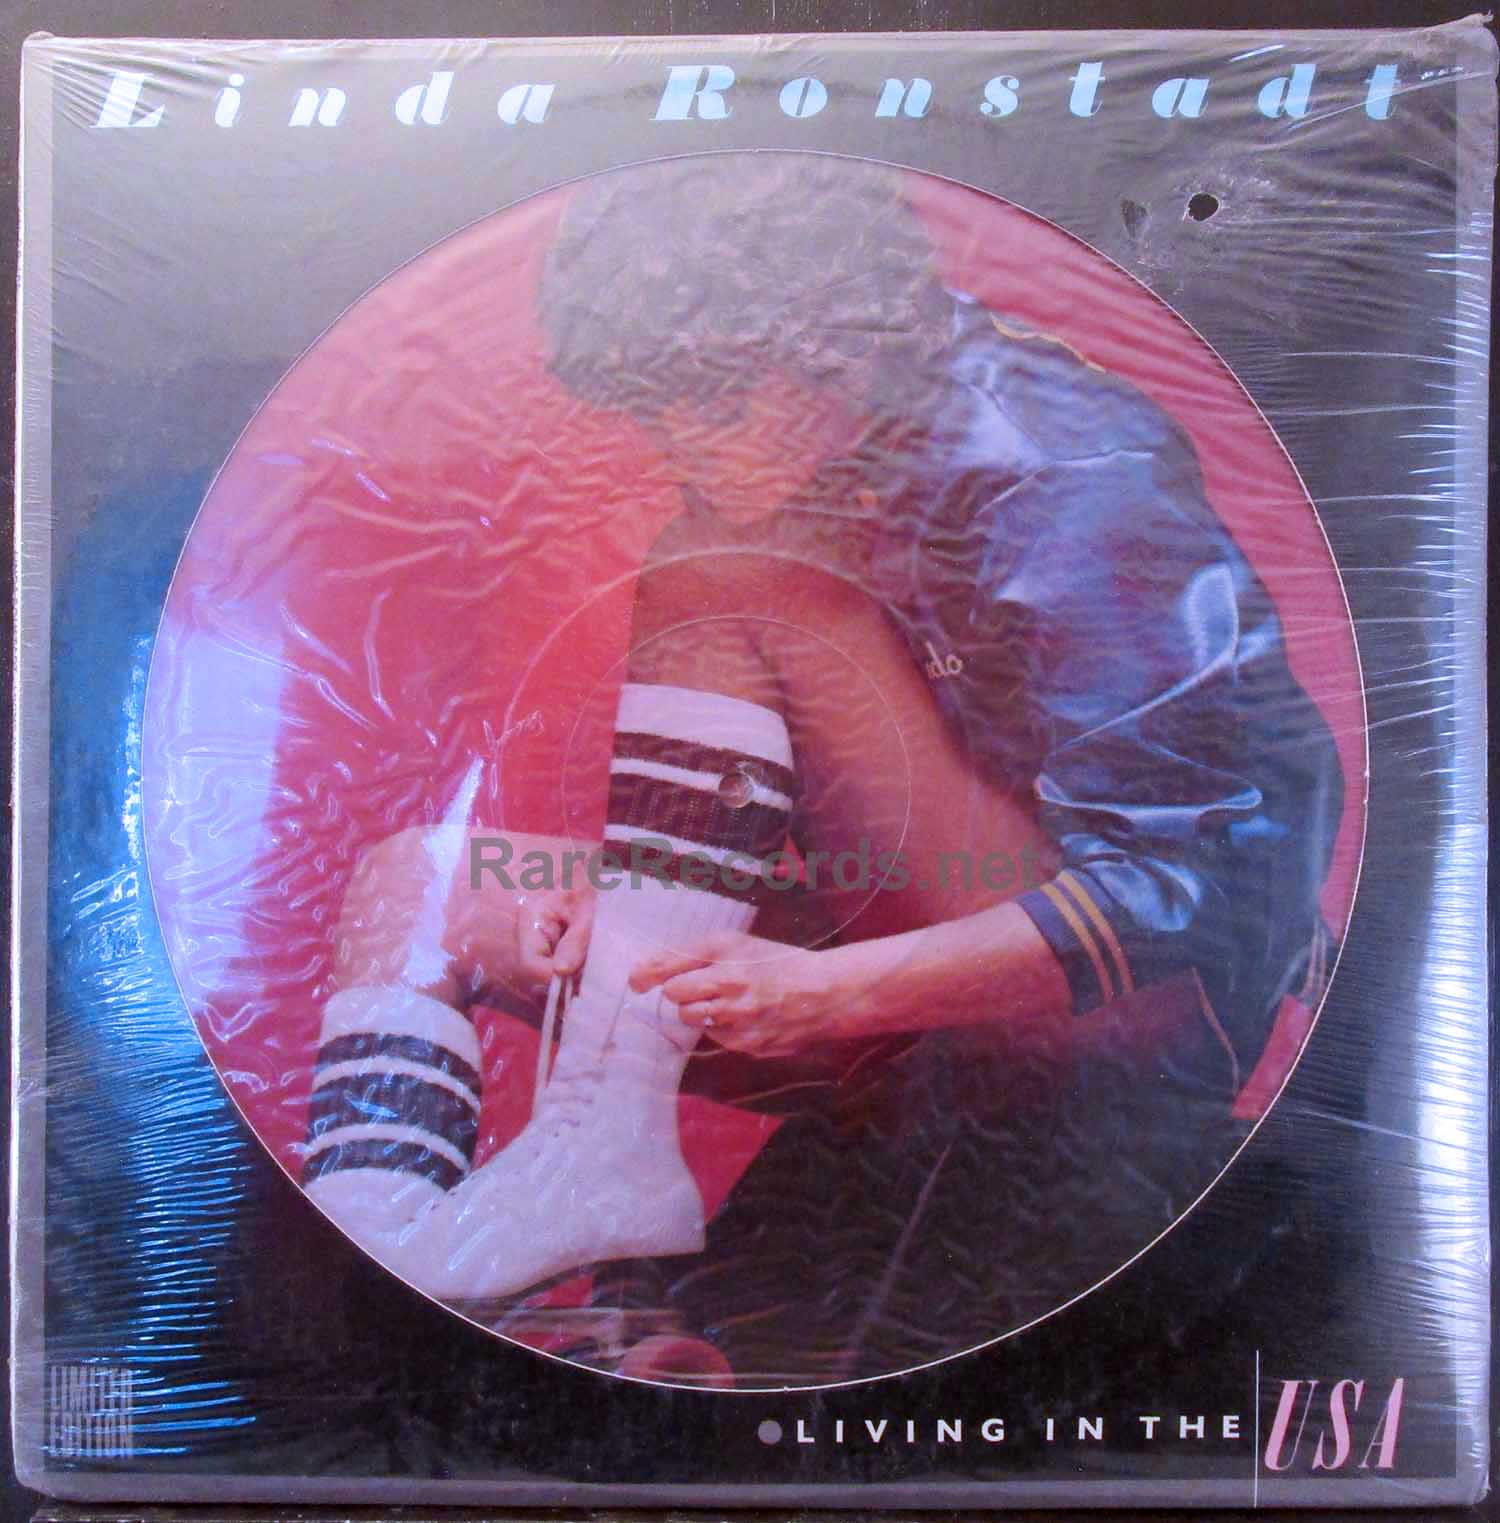 Linda Ronstadt - Living in the U.S.A U.S. picture disc LP